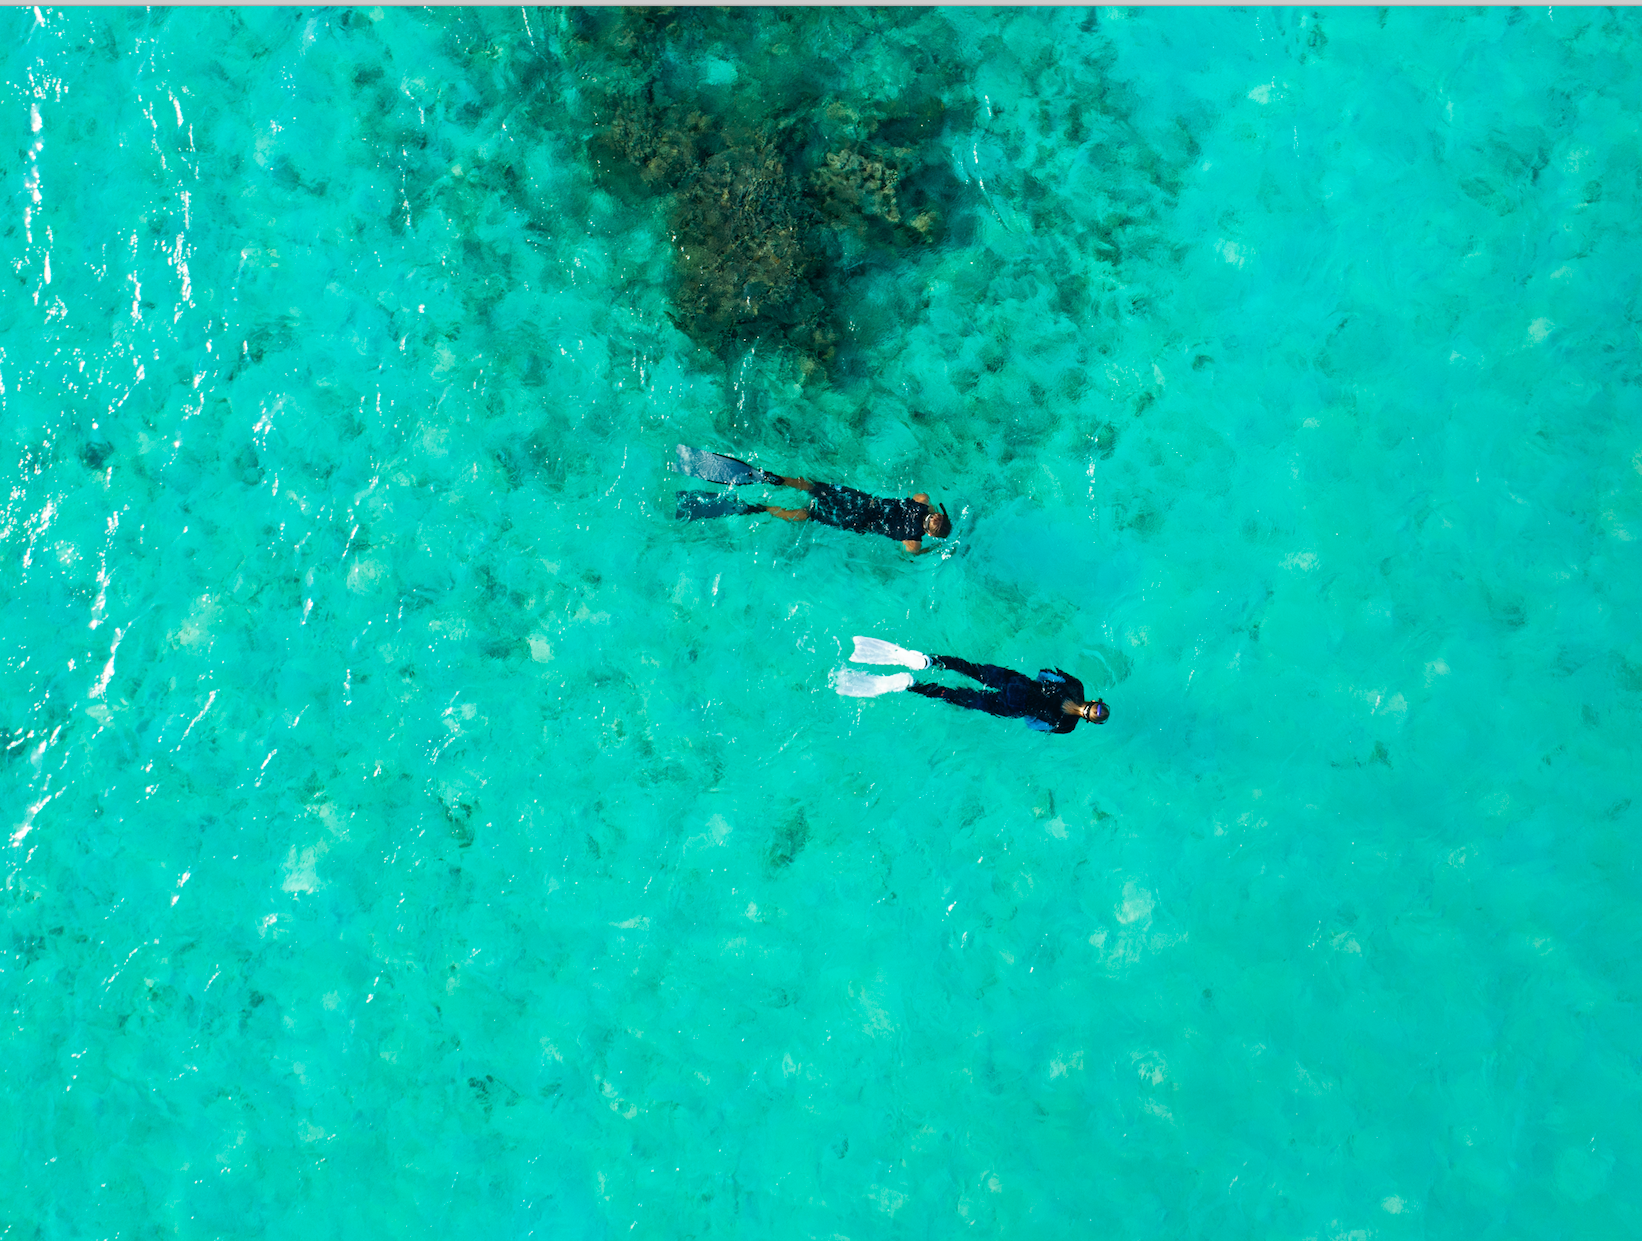   Snorkeling in the lagoon (photo credit: Taj Hotels)  